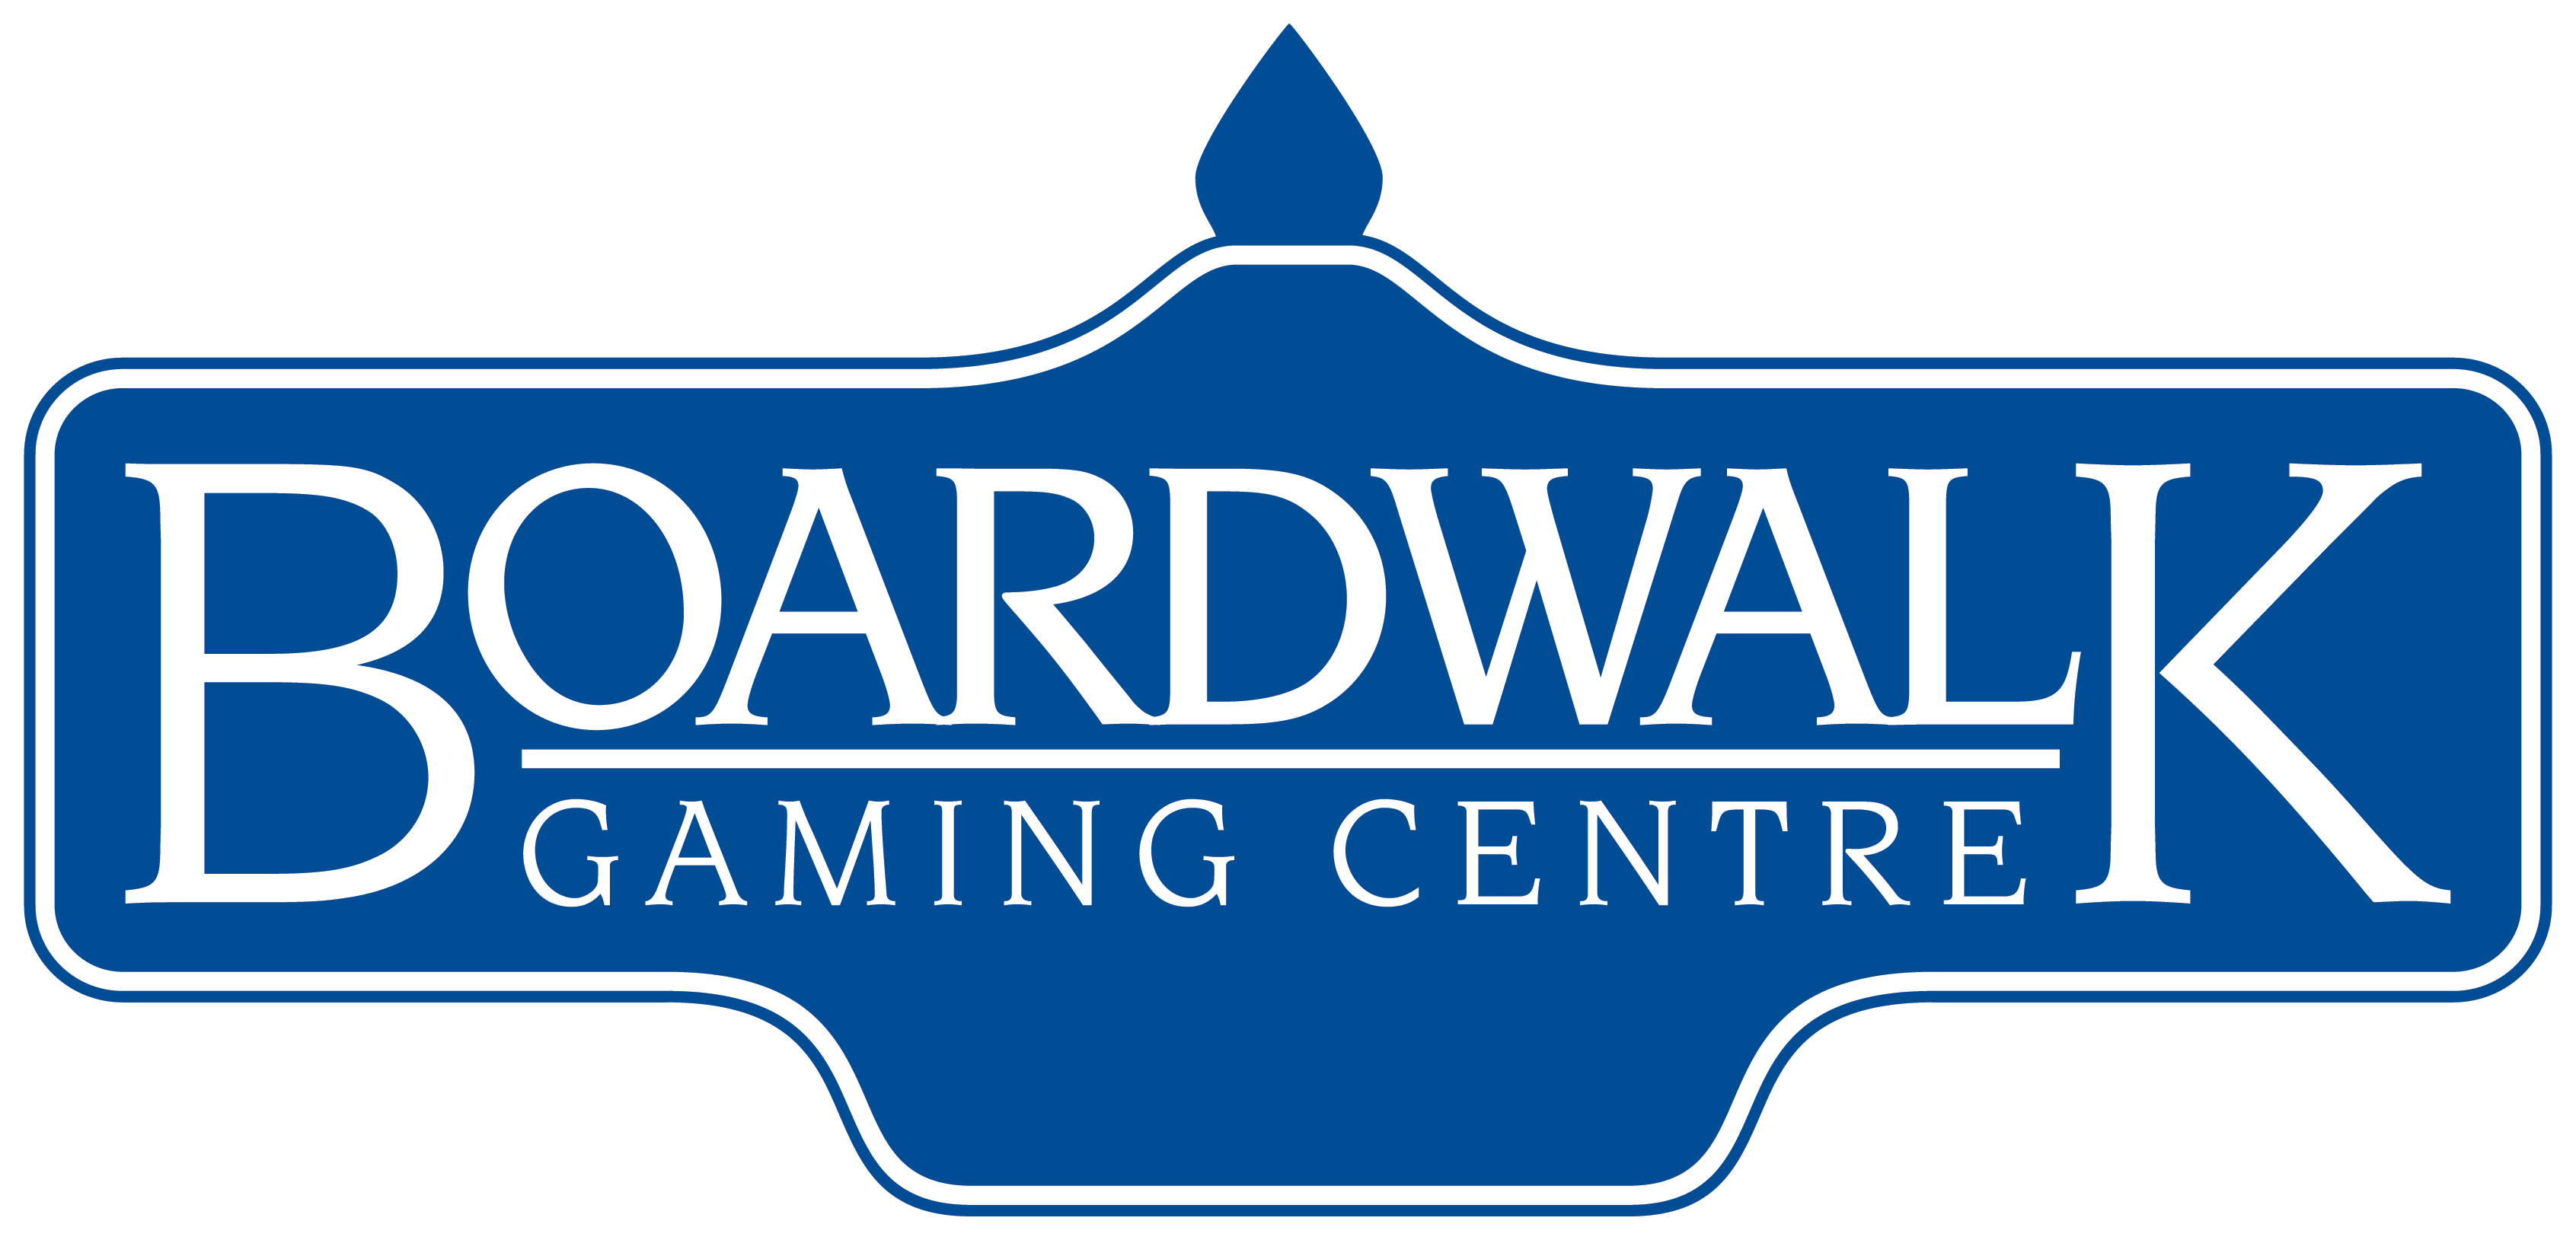 Electric Gaming Logo - Delta Bingo & Gaming | Boardwalk Gaming Logo - Outlines - Delta ...